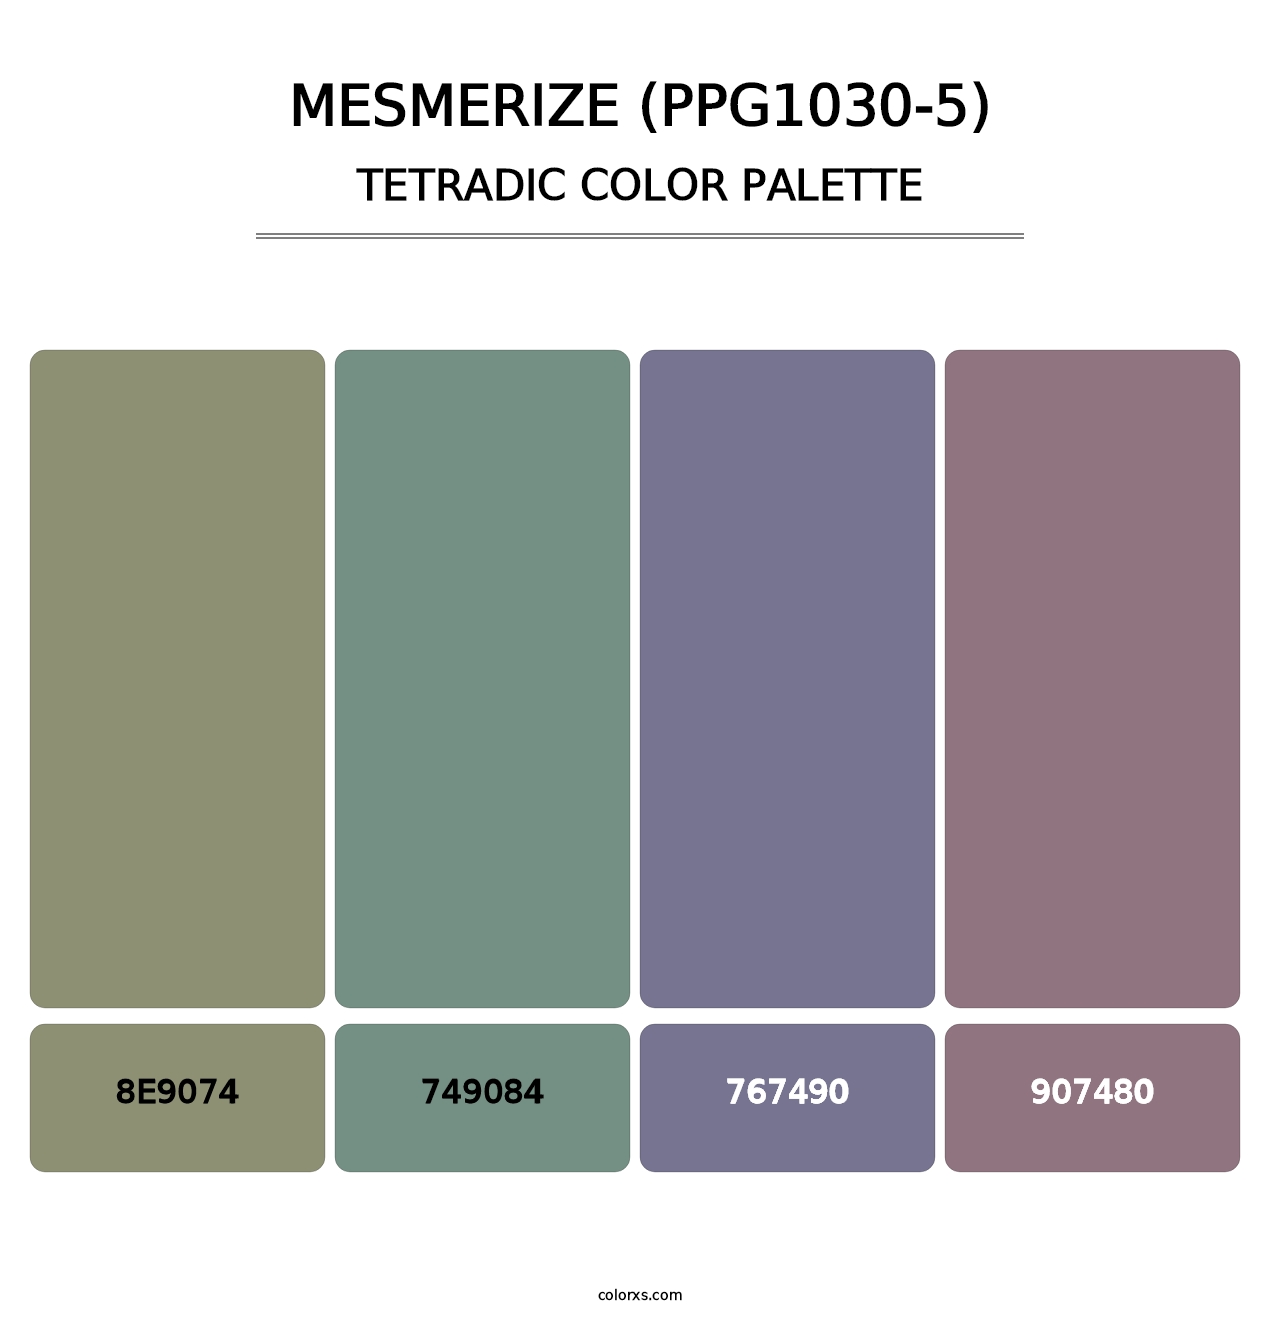 Mesmerize (PPG1030-5) - Tetradic Color Palette